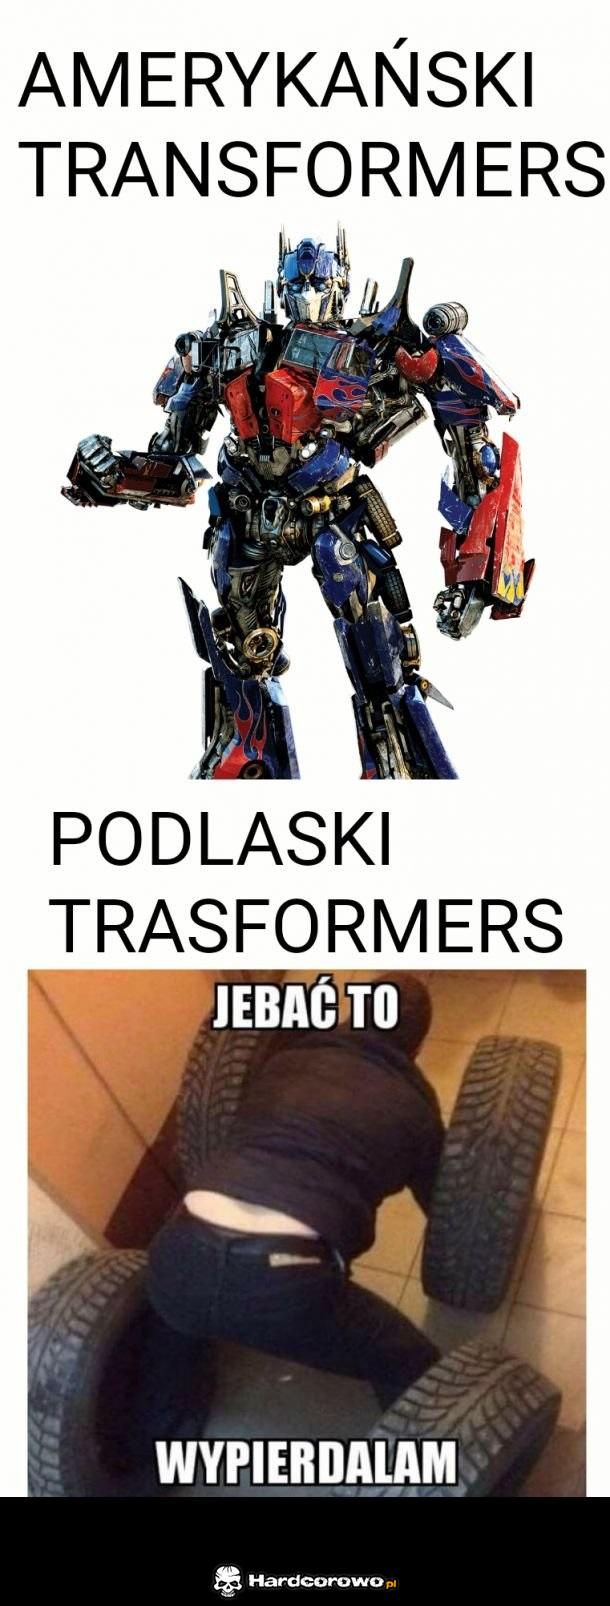 Podlaski transformers - 1